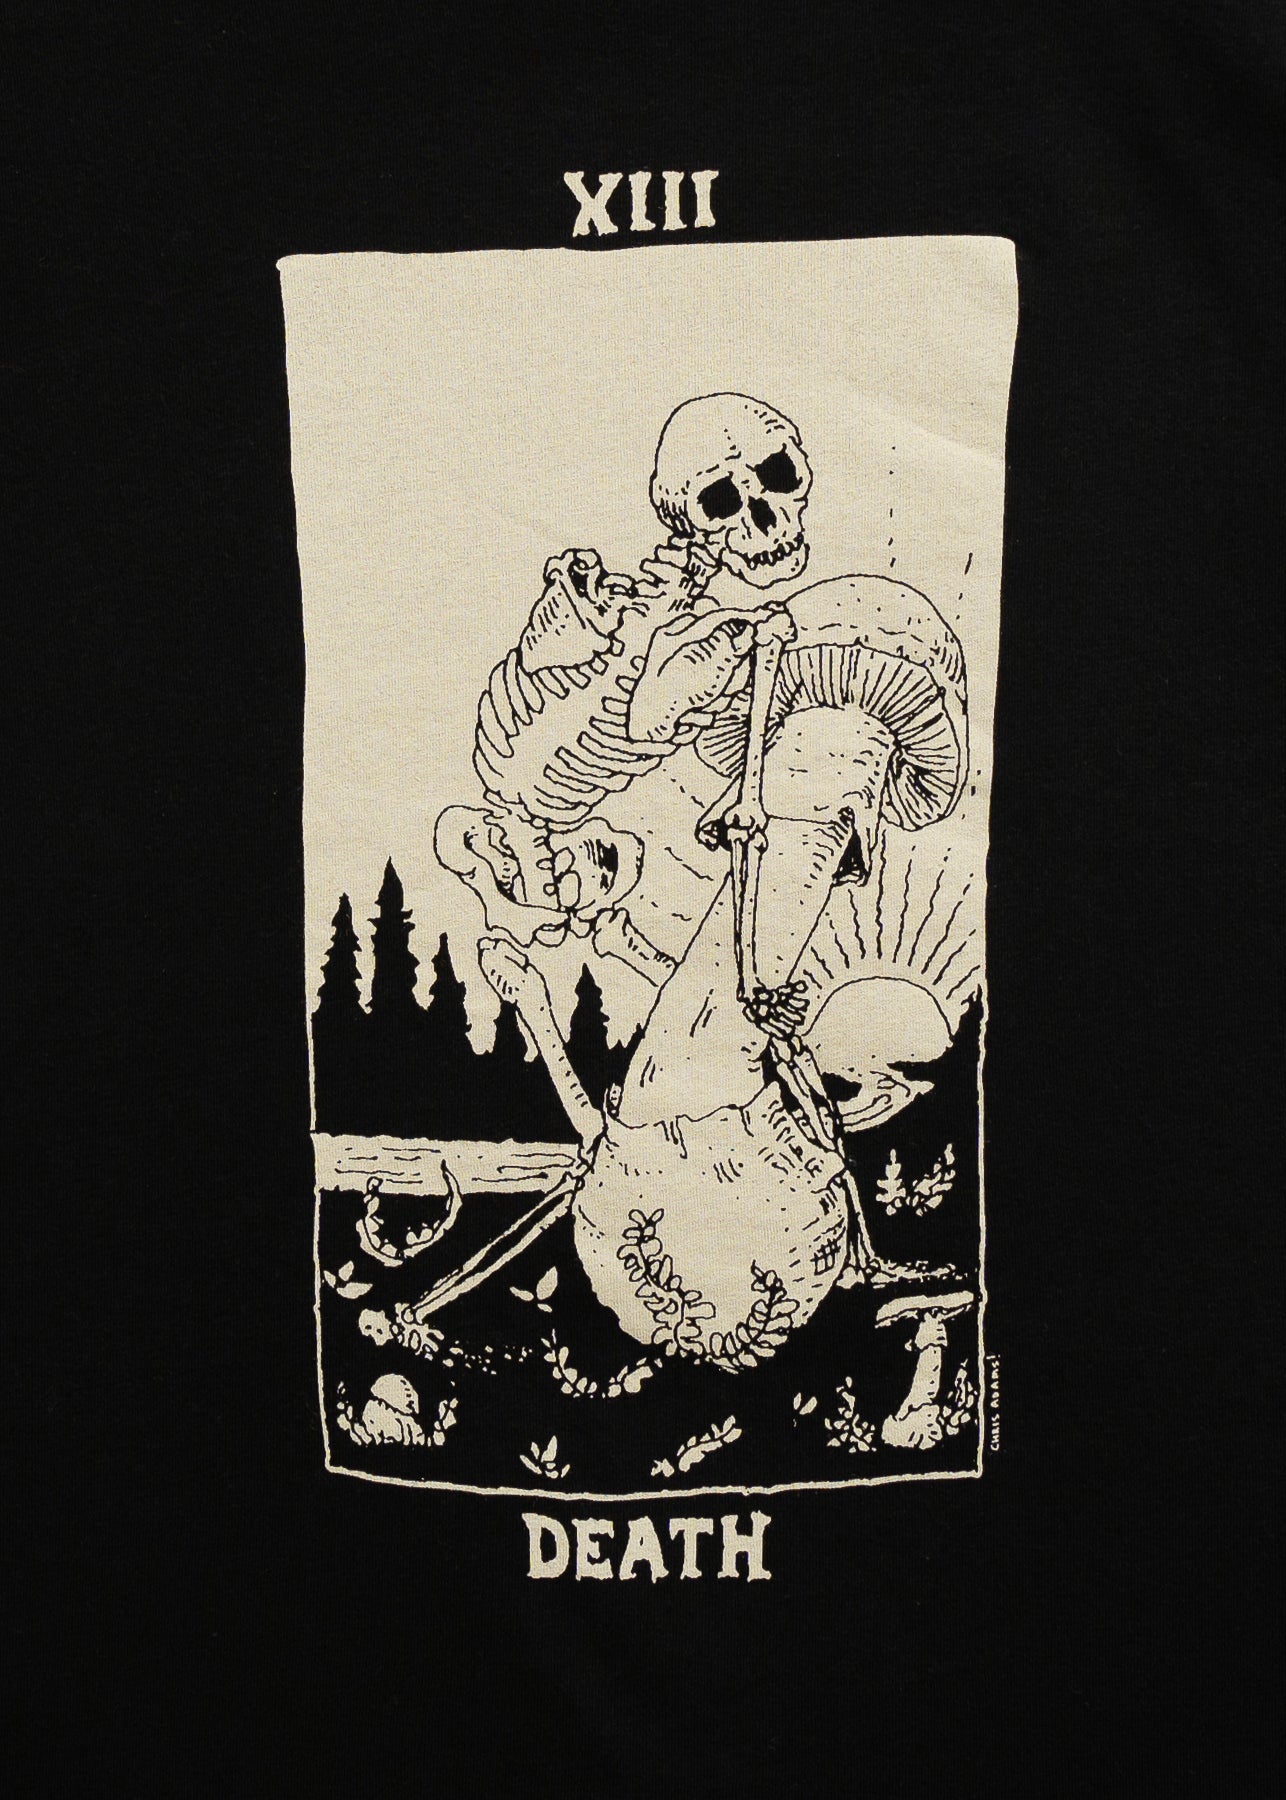 Mushroom Tarot Death Card Shirt, Black Organic Cotton